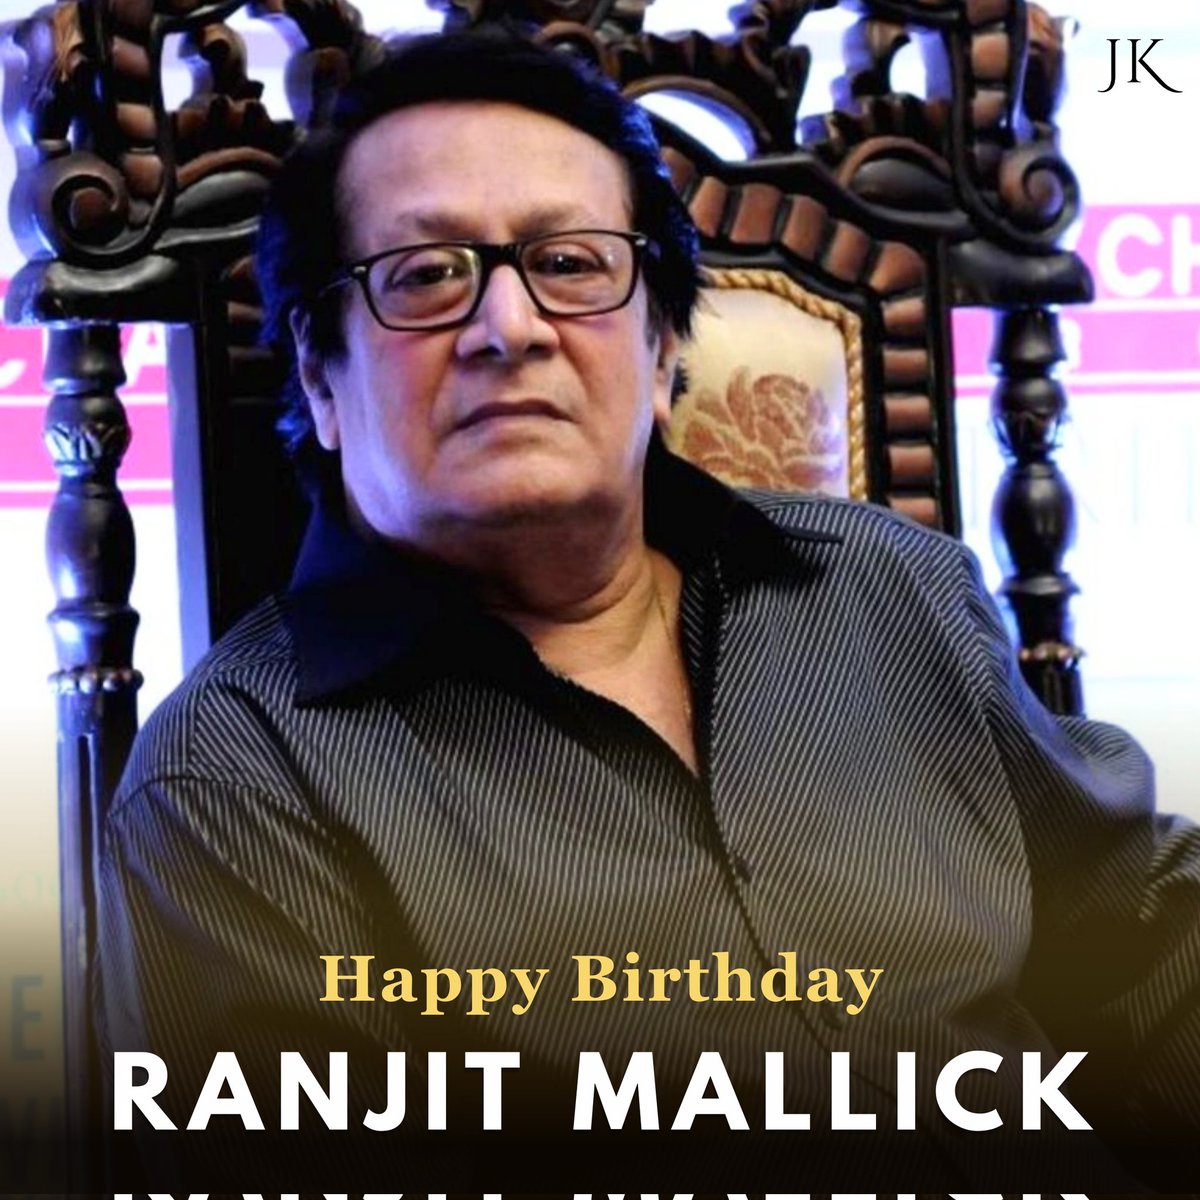 Happy Birthday Ranjit Jethu...khub valo theko ❤️😇
#RanjitMallick